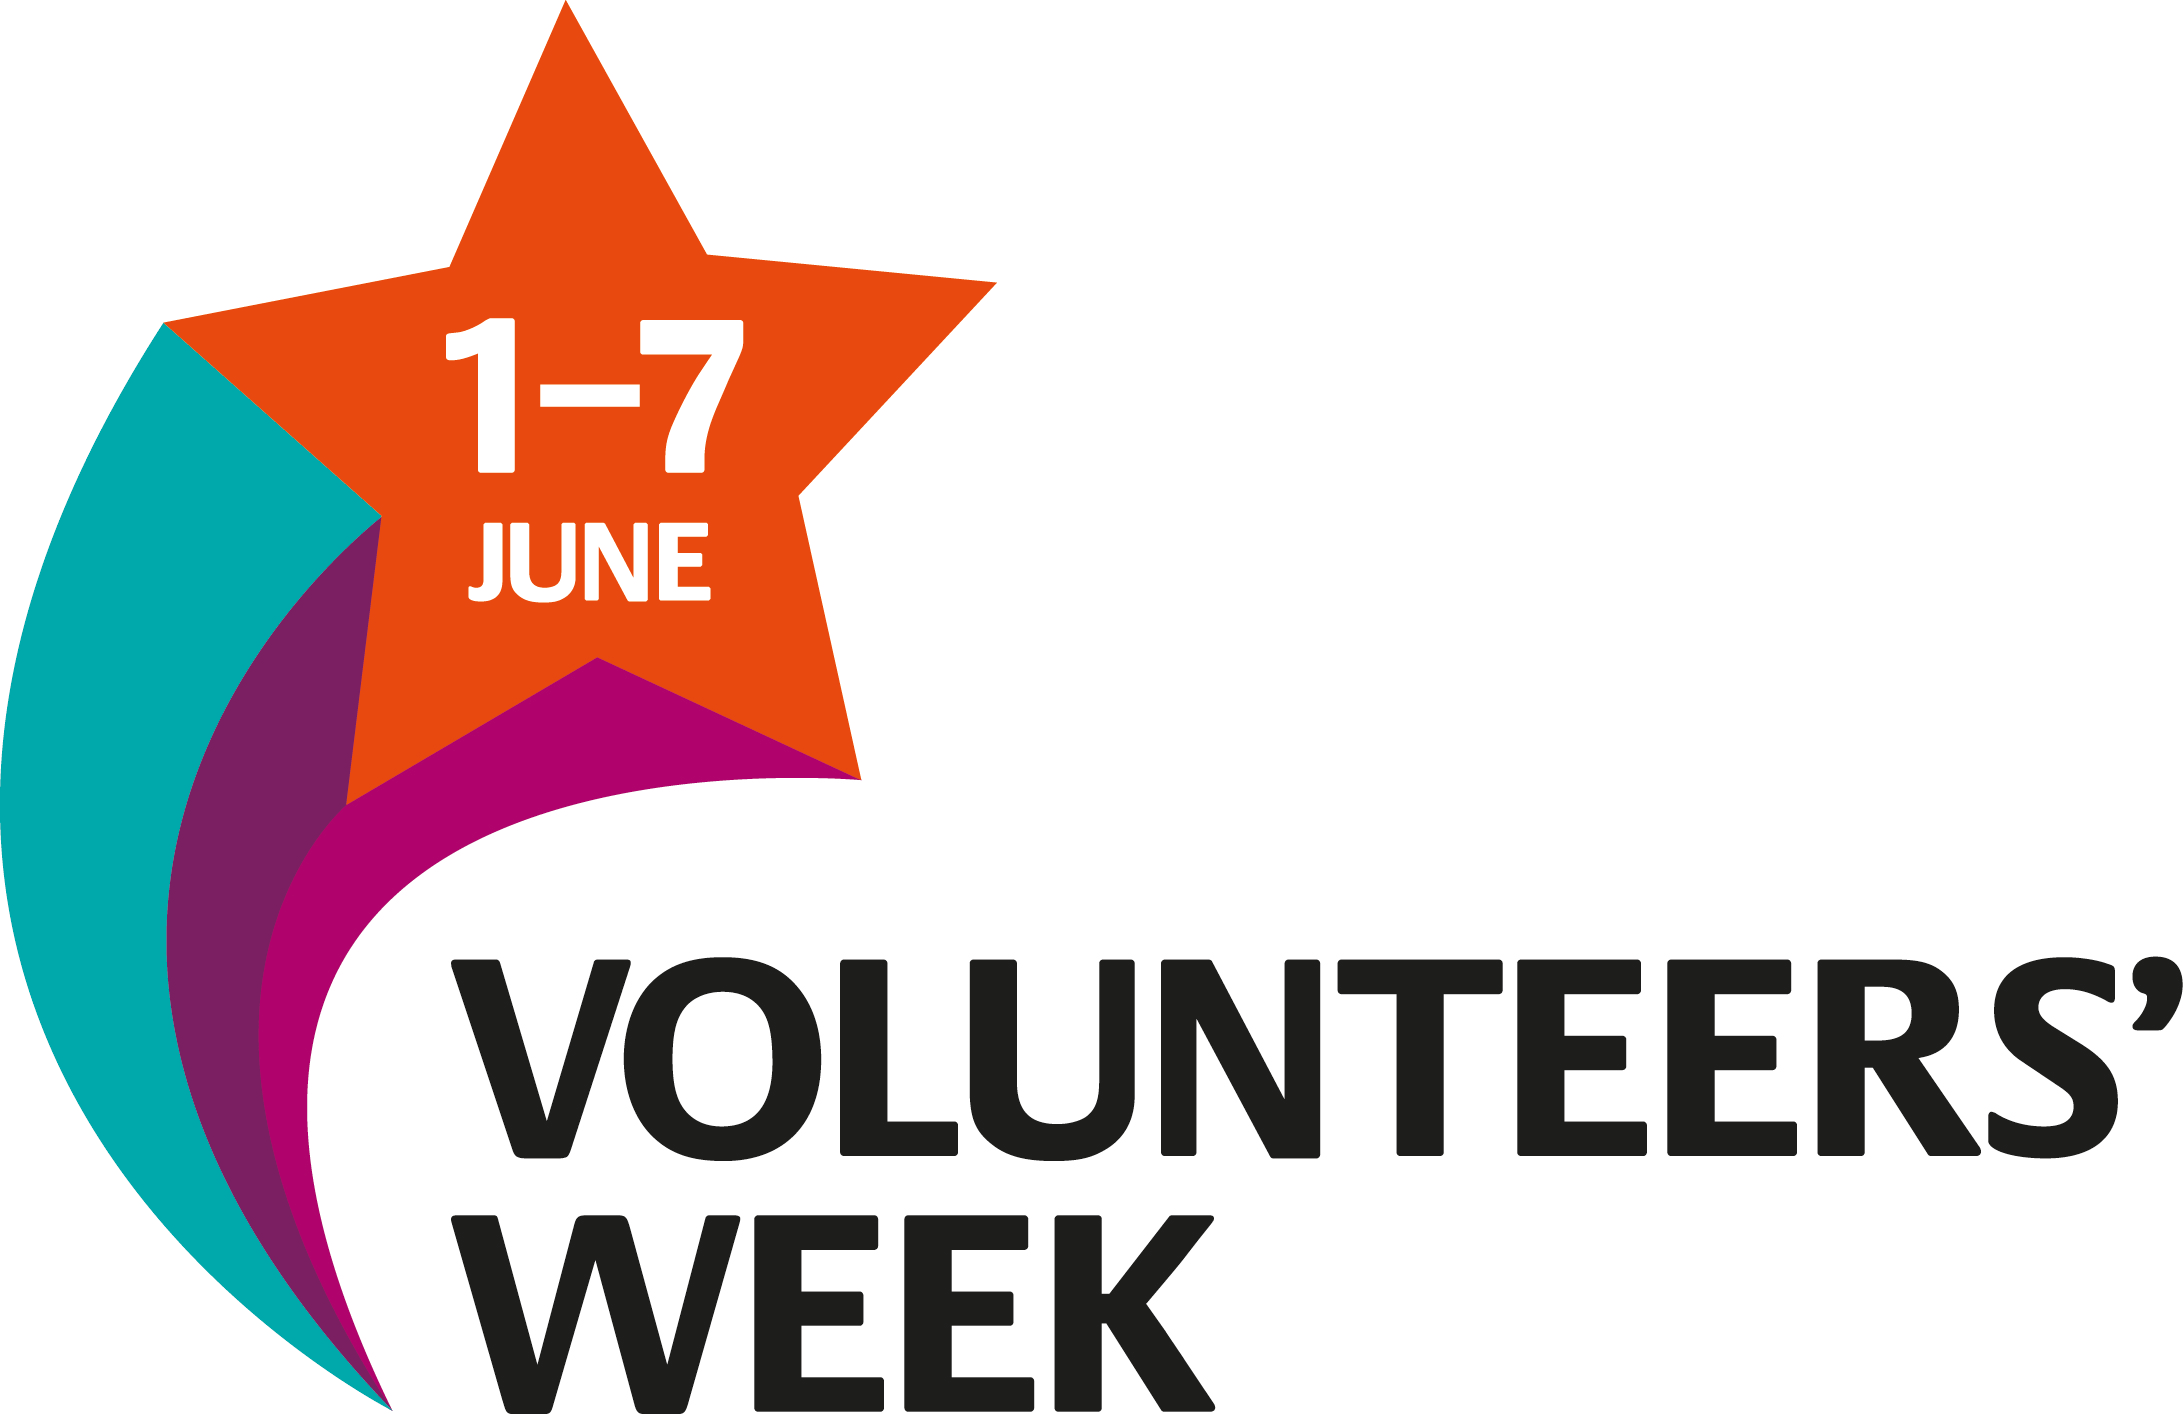 STRC Celebrates Volunteers' Week 2017! Come Join Us!